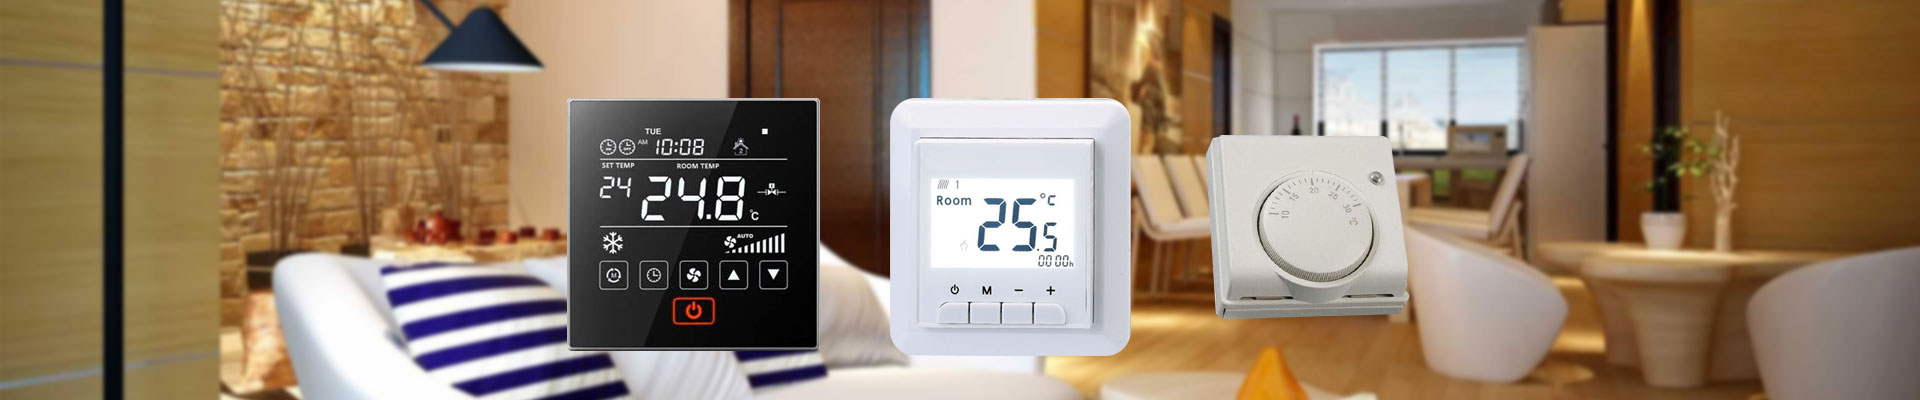 R331 Wifi underfloor heating room thermostat Smart thermostat